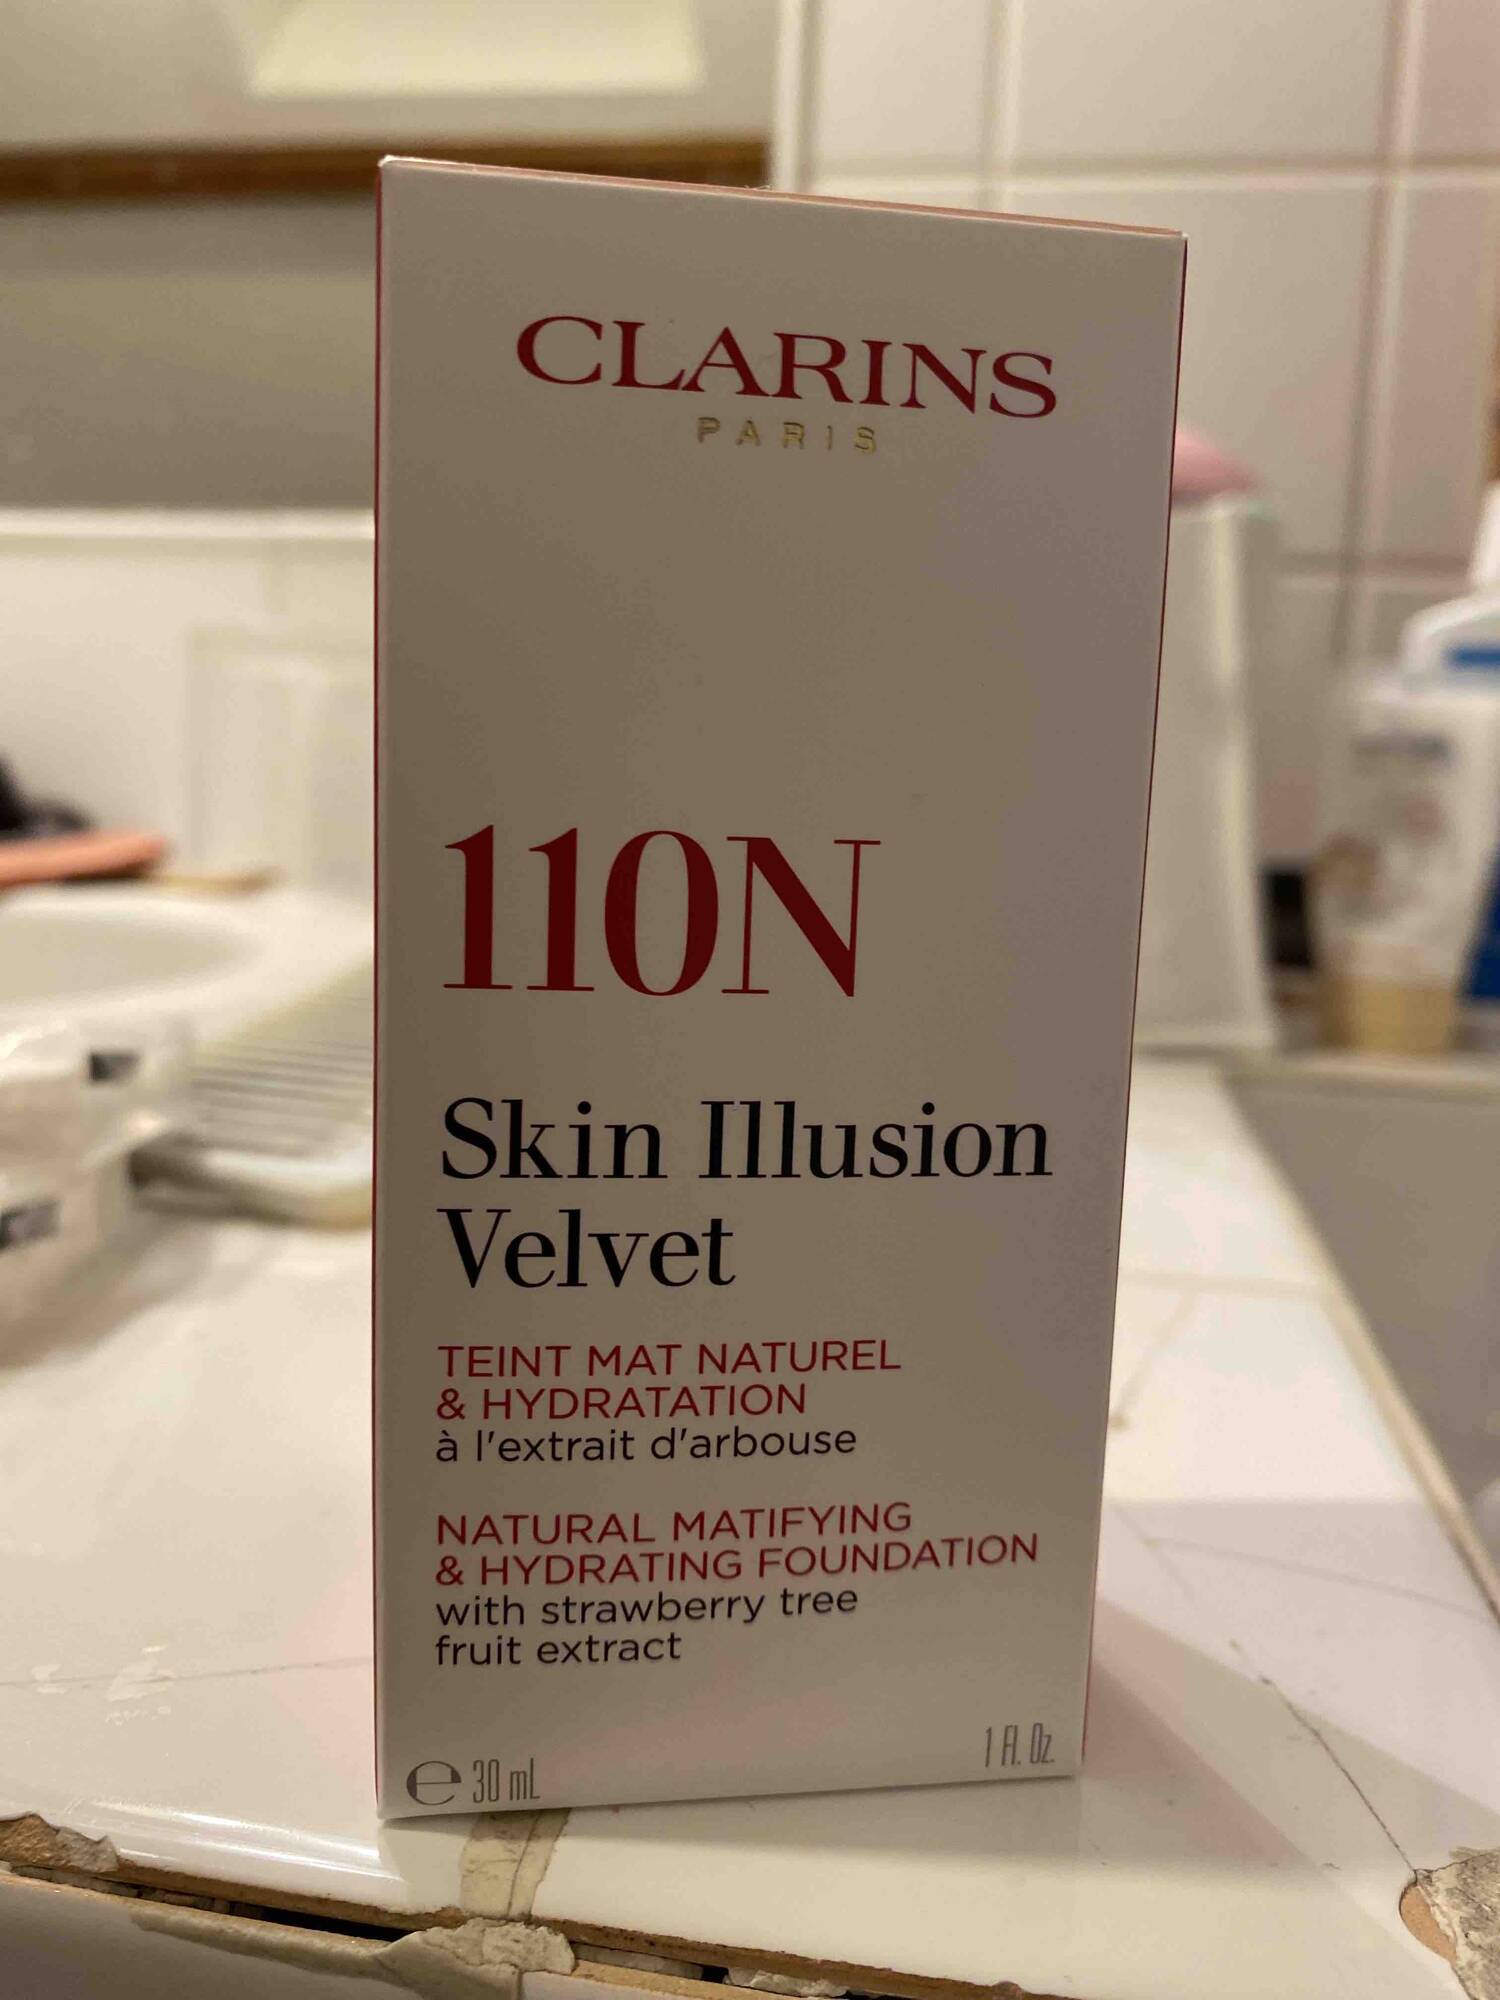 CLARINS - 110N skin illusion velvet - Teint mat naturel & hydratation